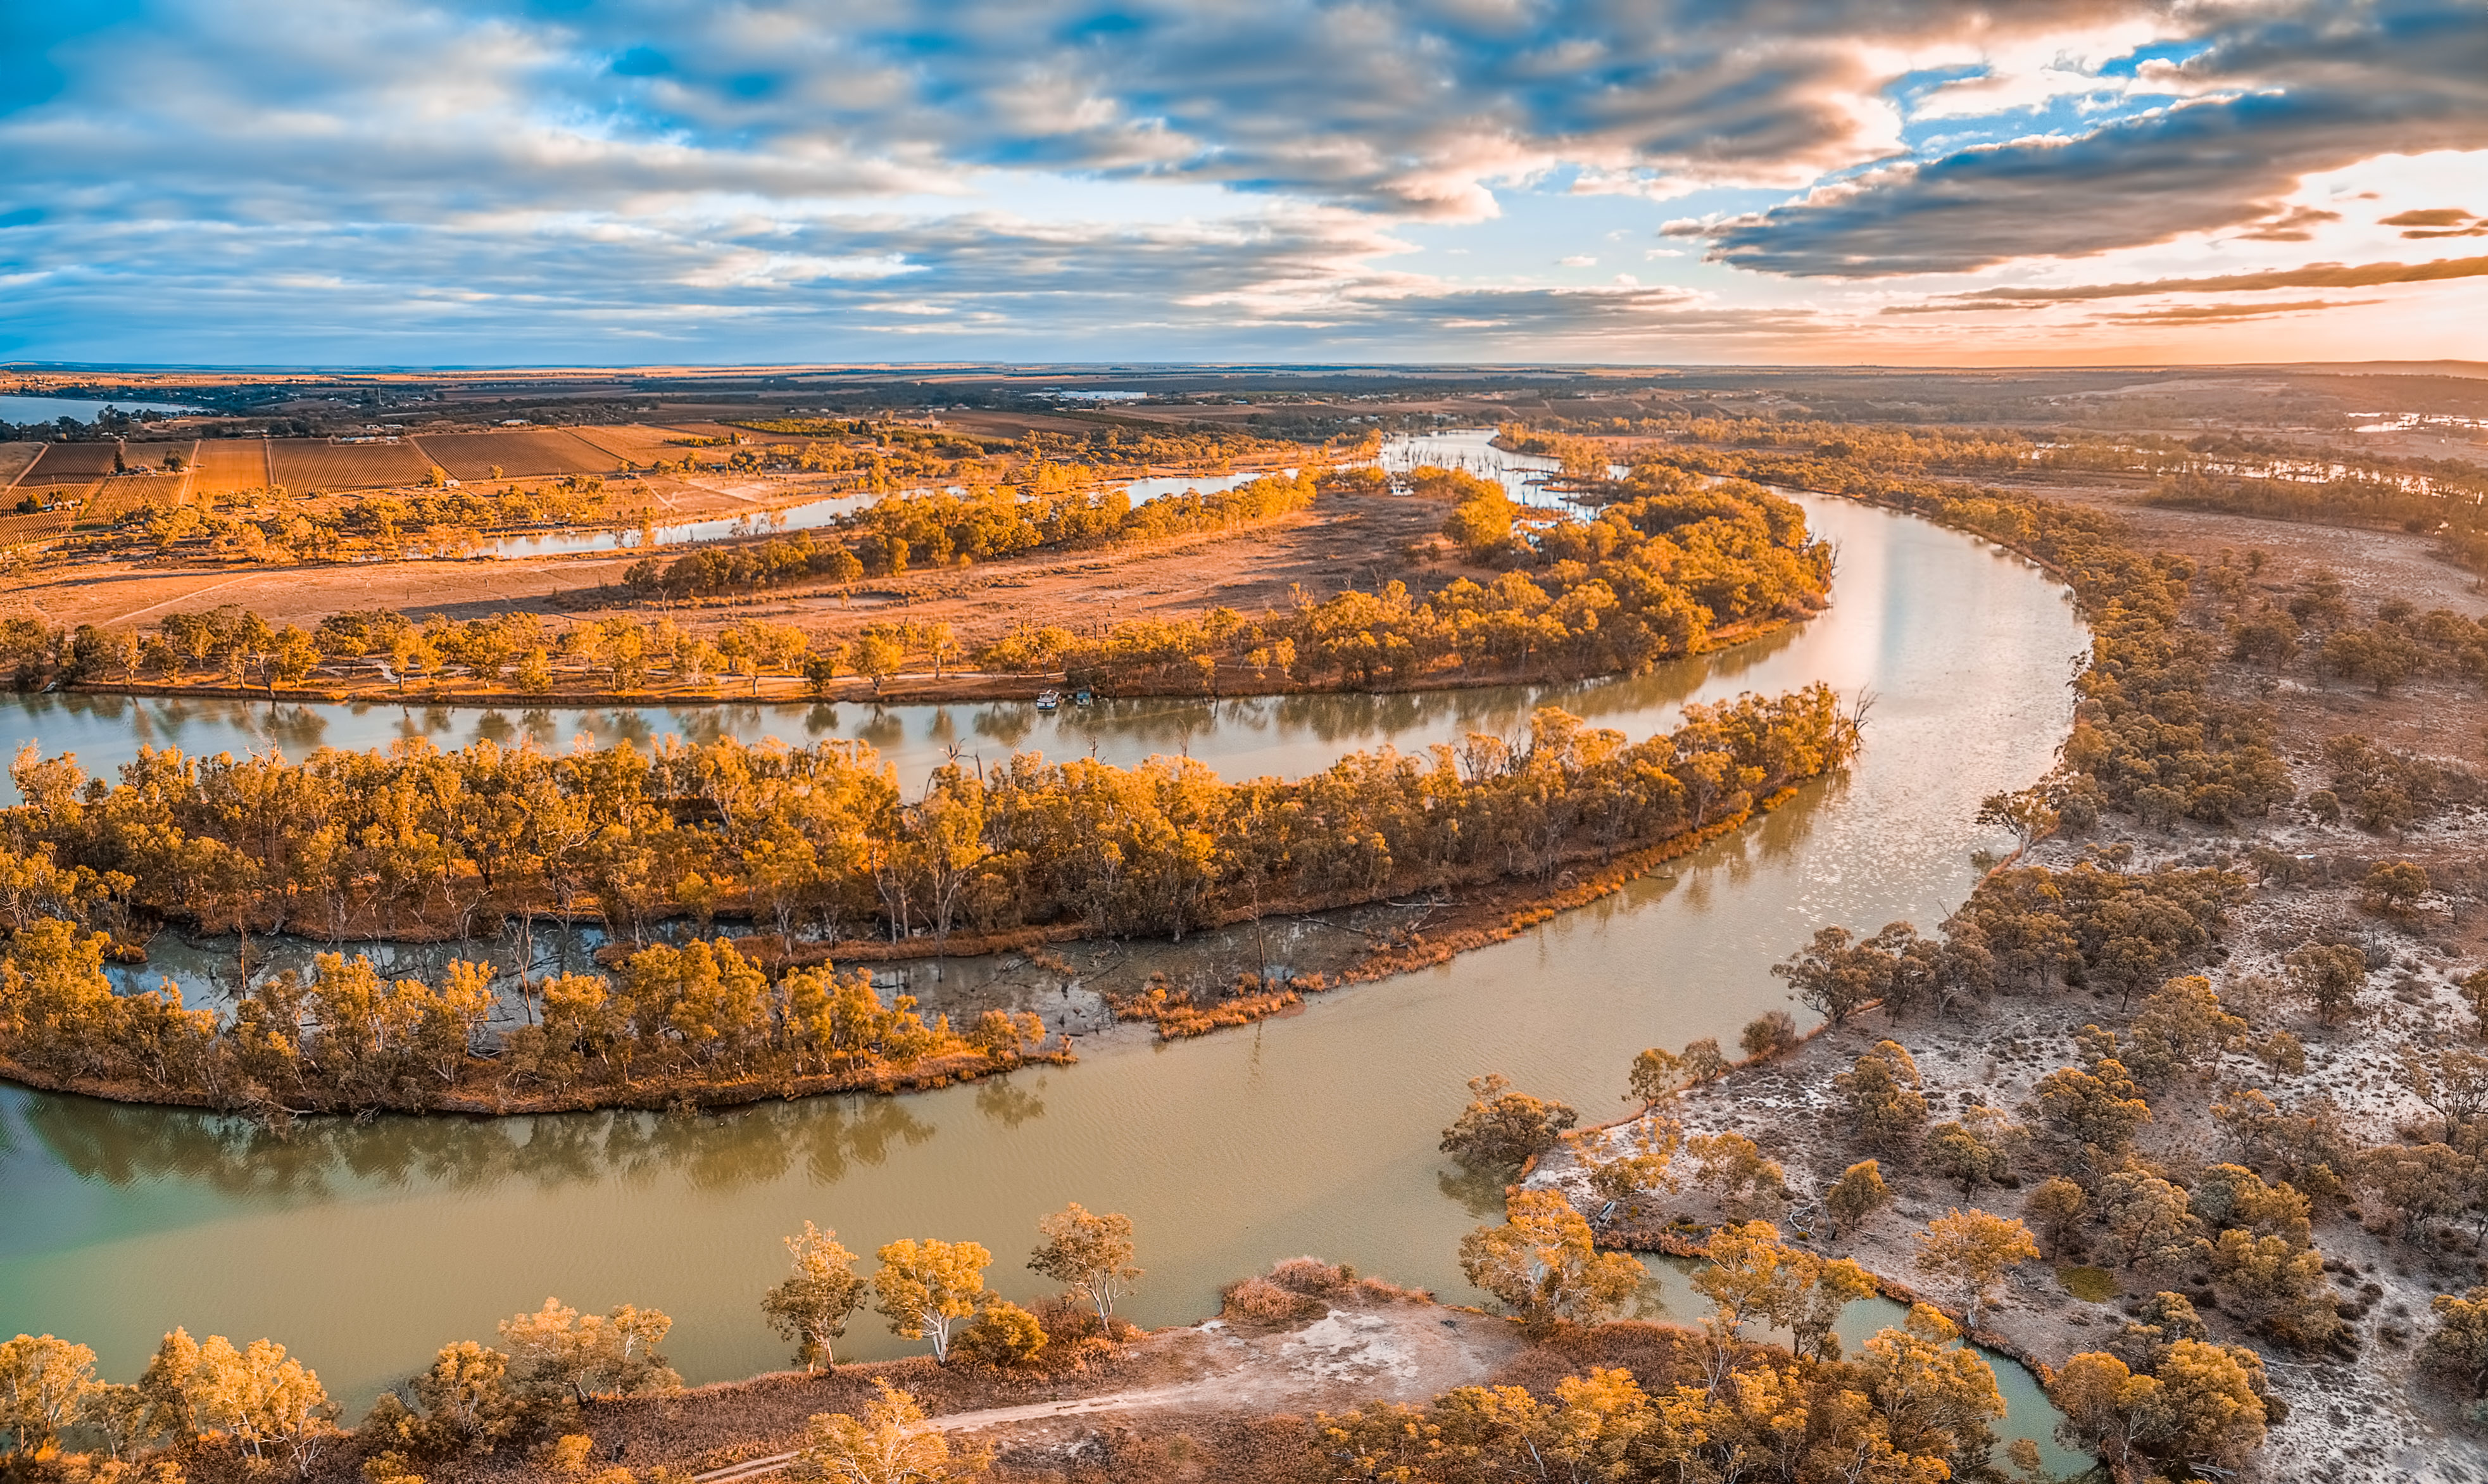 Slide 21 of 41: "Aerial View Of River Against Sky During Autumn. Photo Taken In Kingston, Australia"